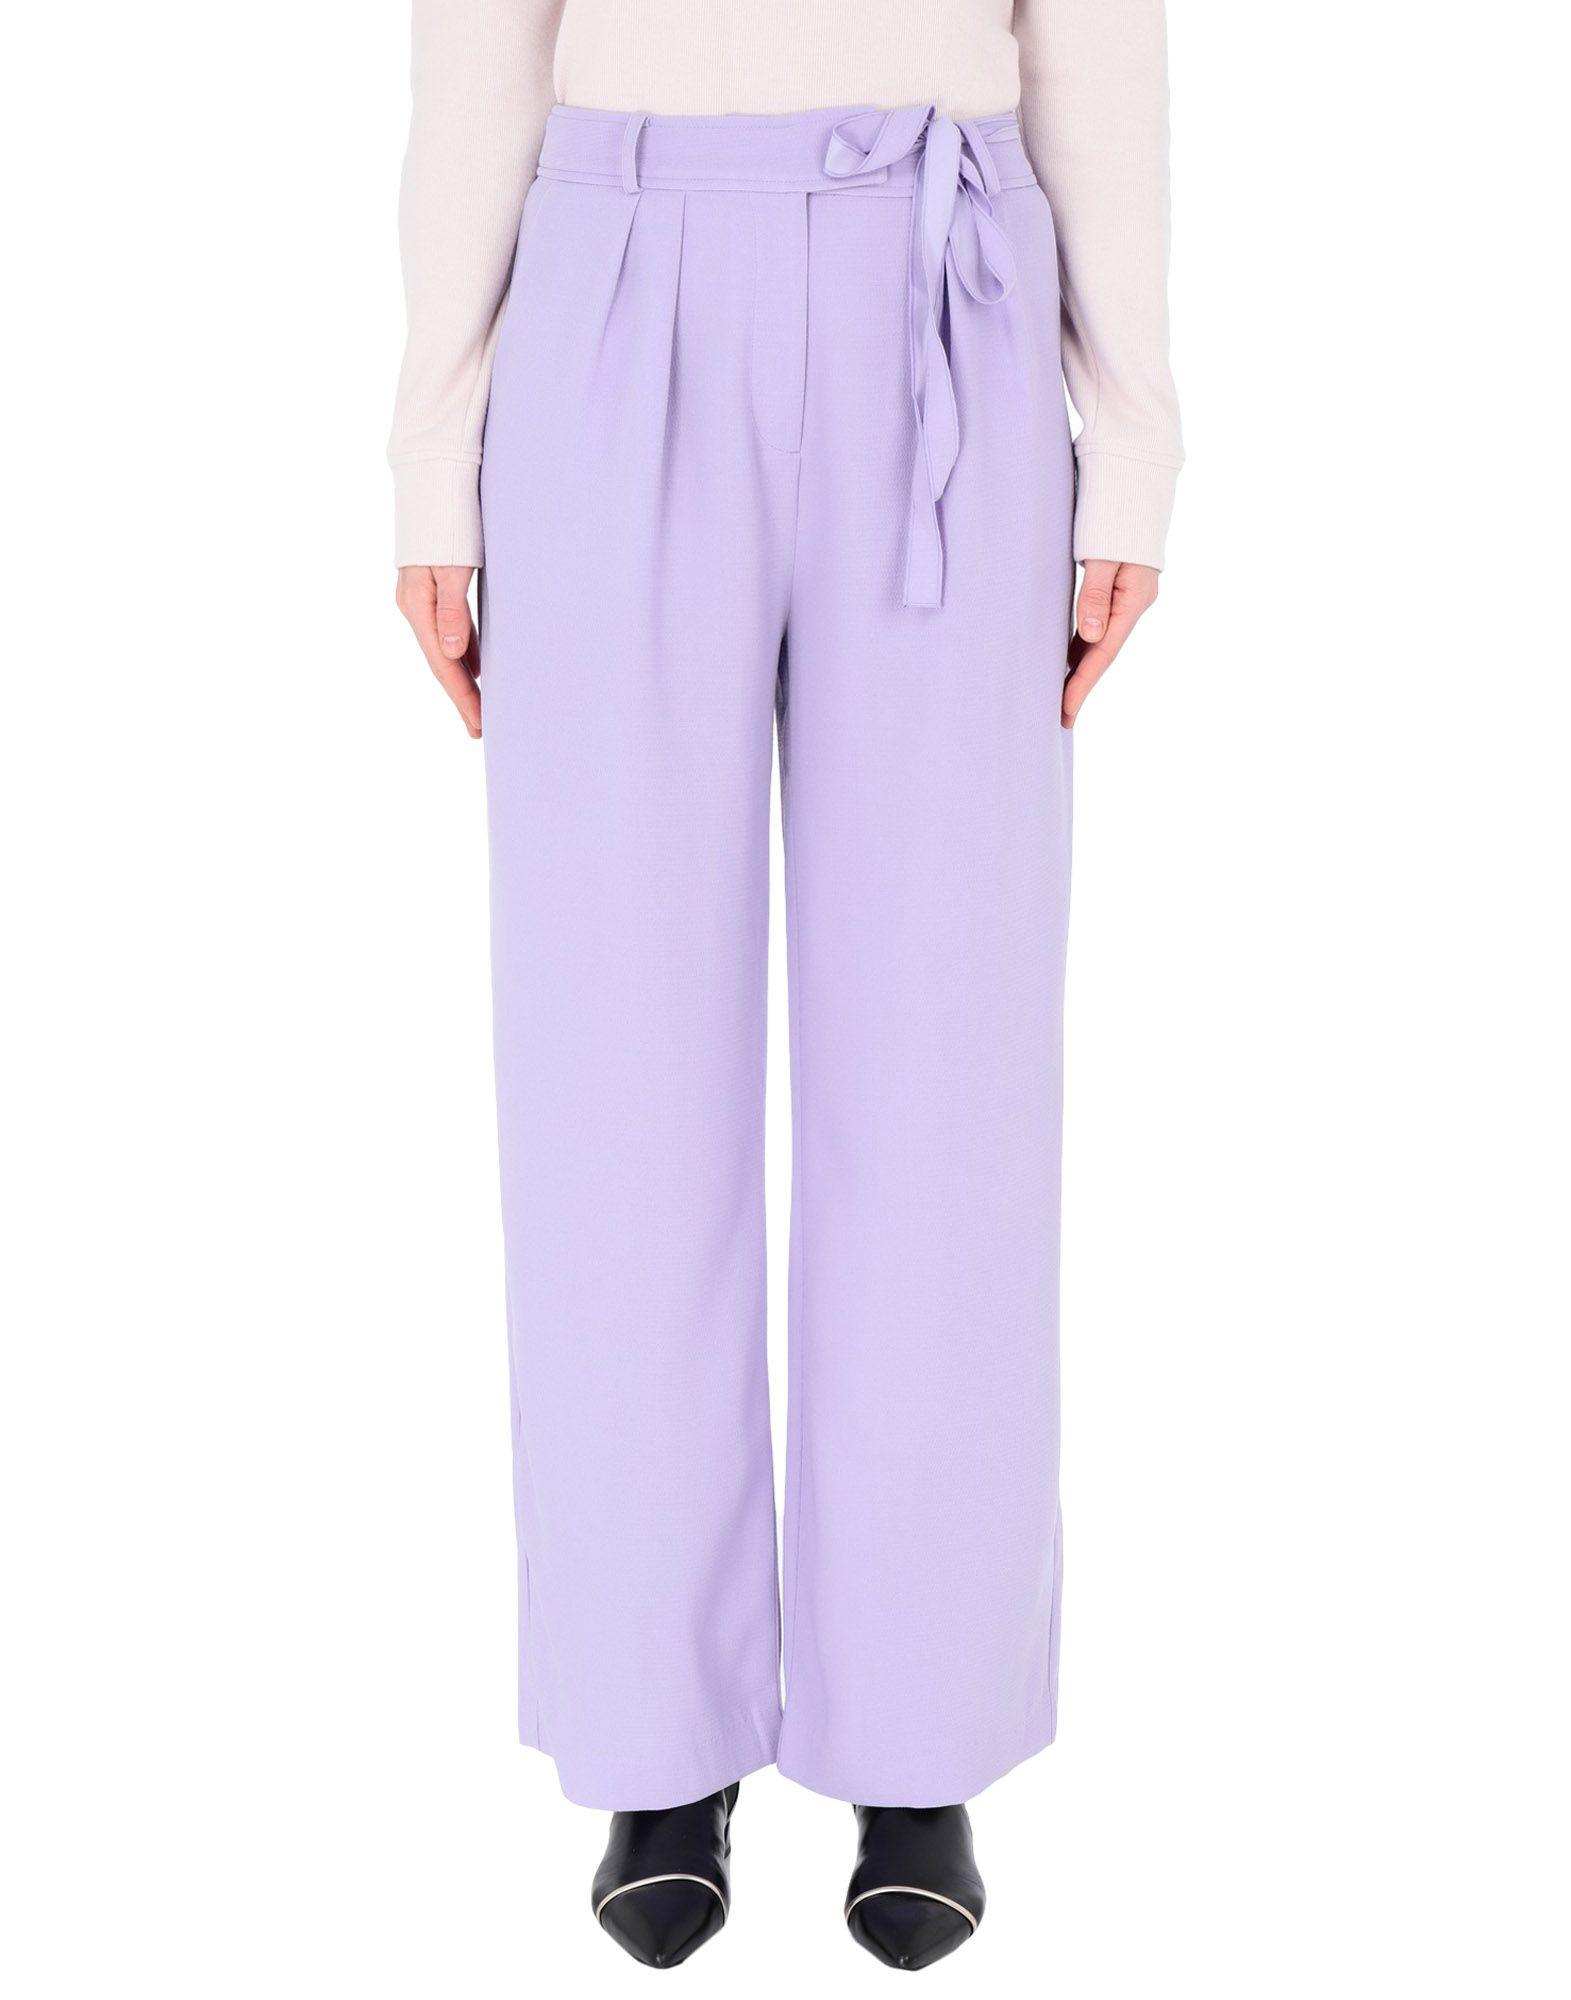 Samsøe & Samsøe Synthetic Casual Pants in Lilac (Purple) - Lyst